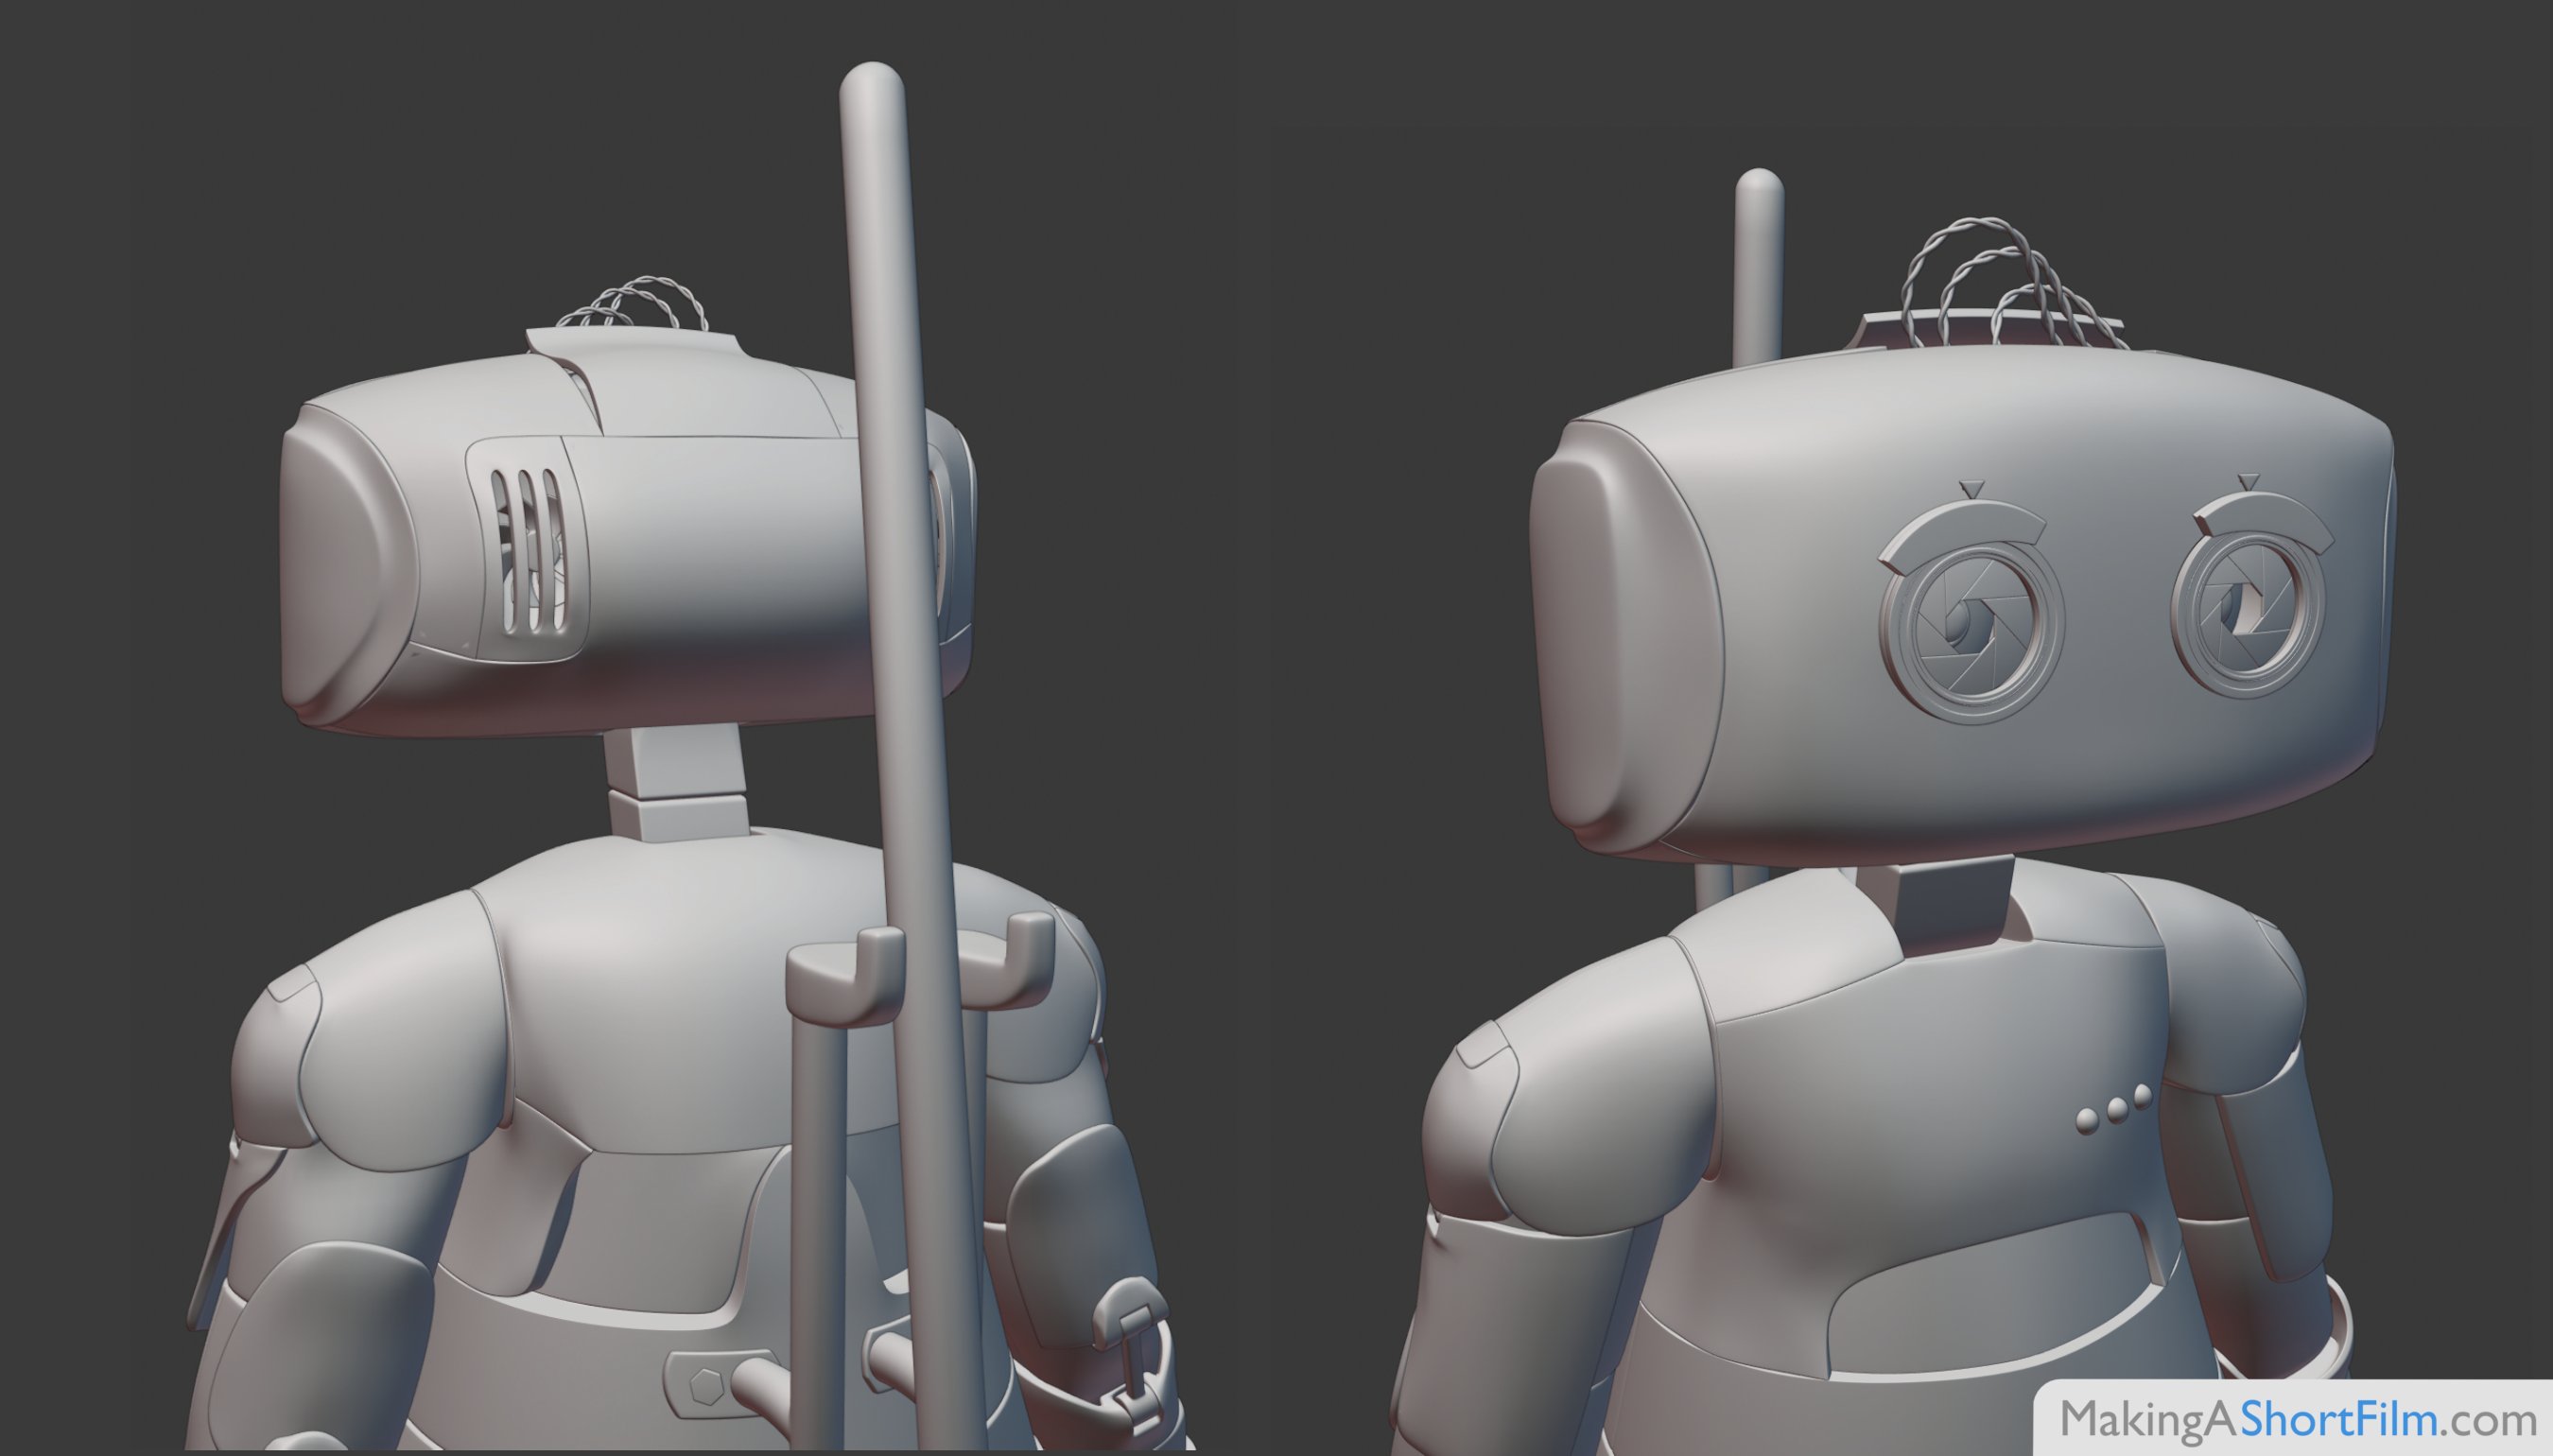 The Robot Head